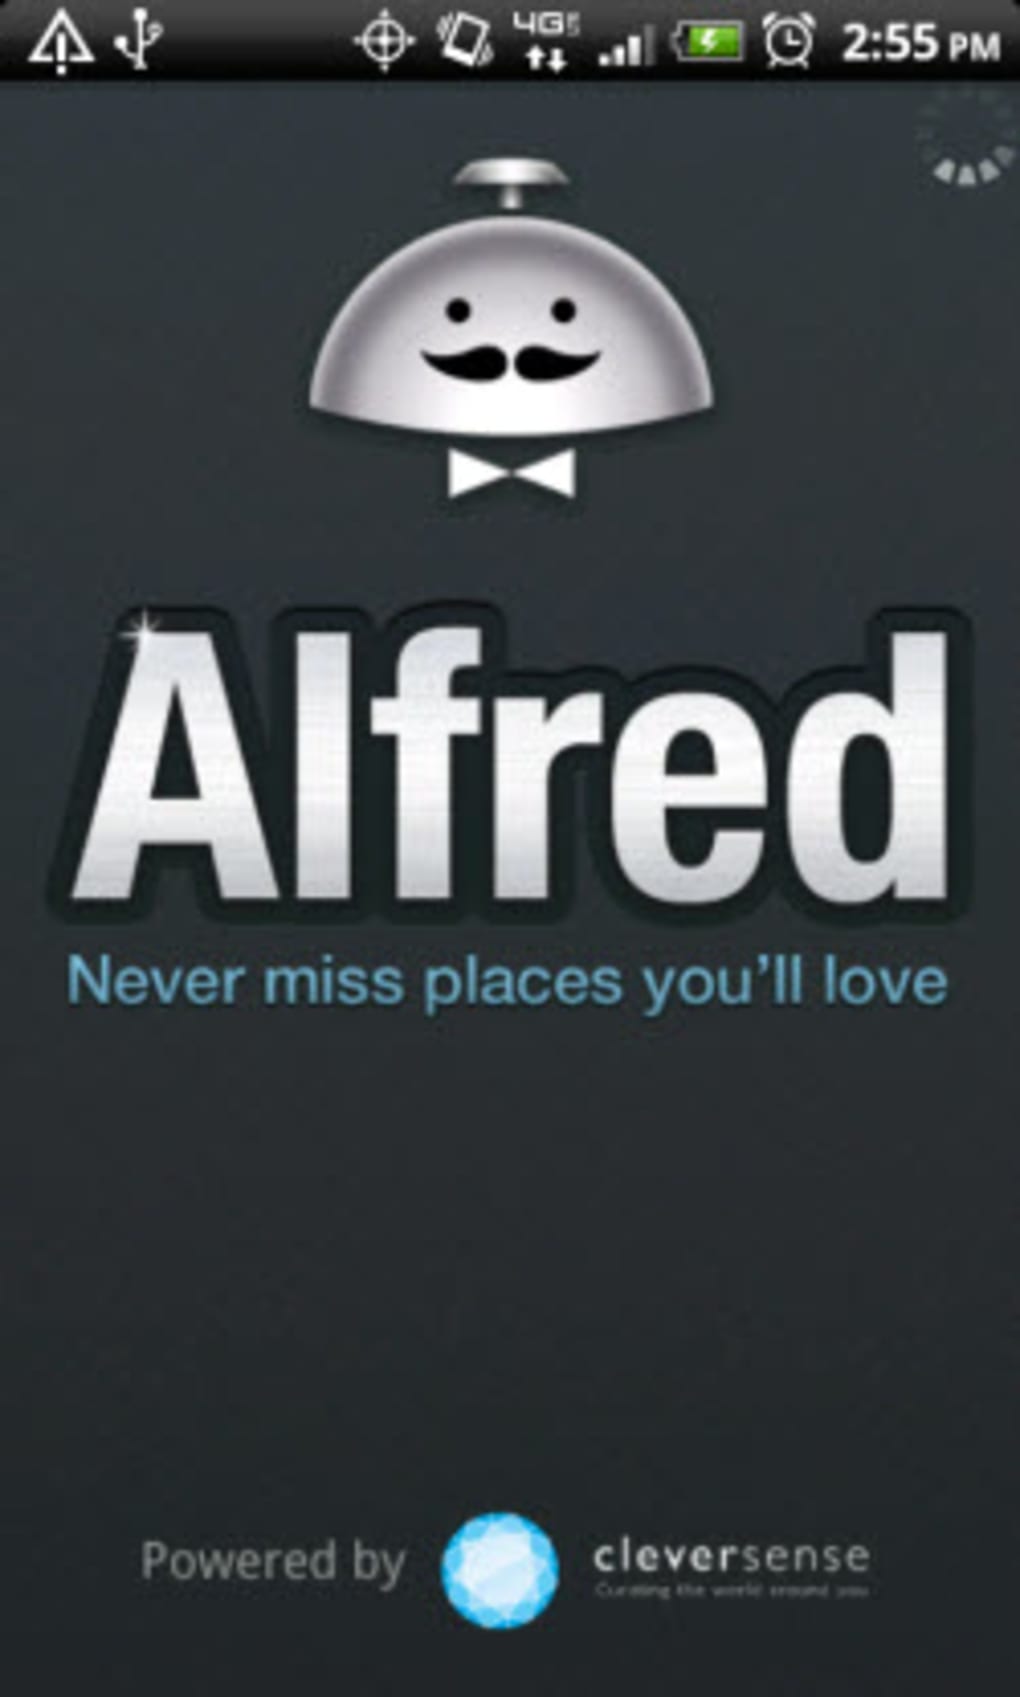 hello alfred app